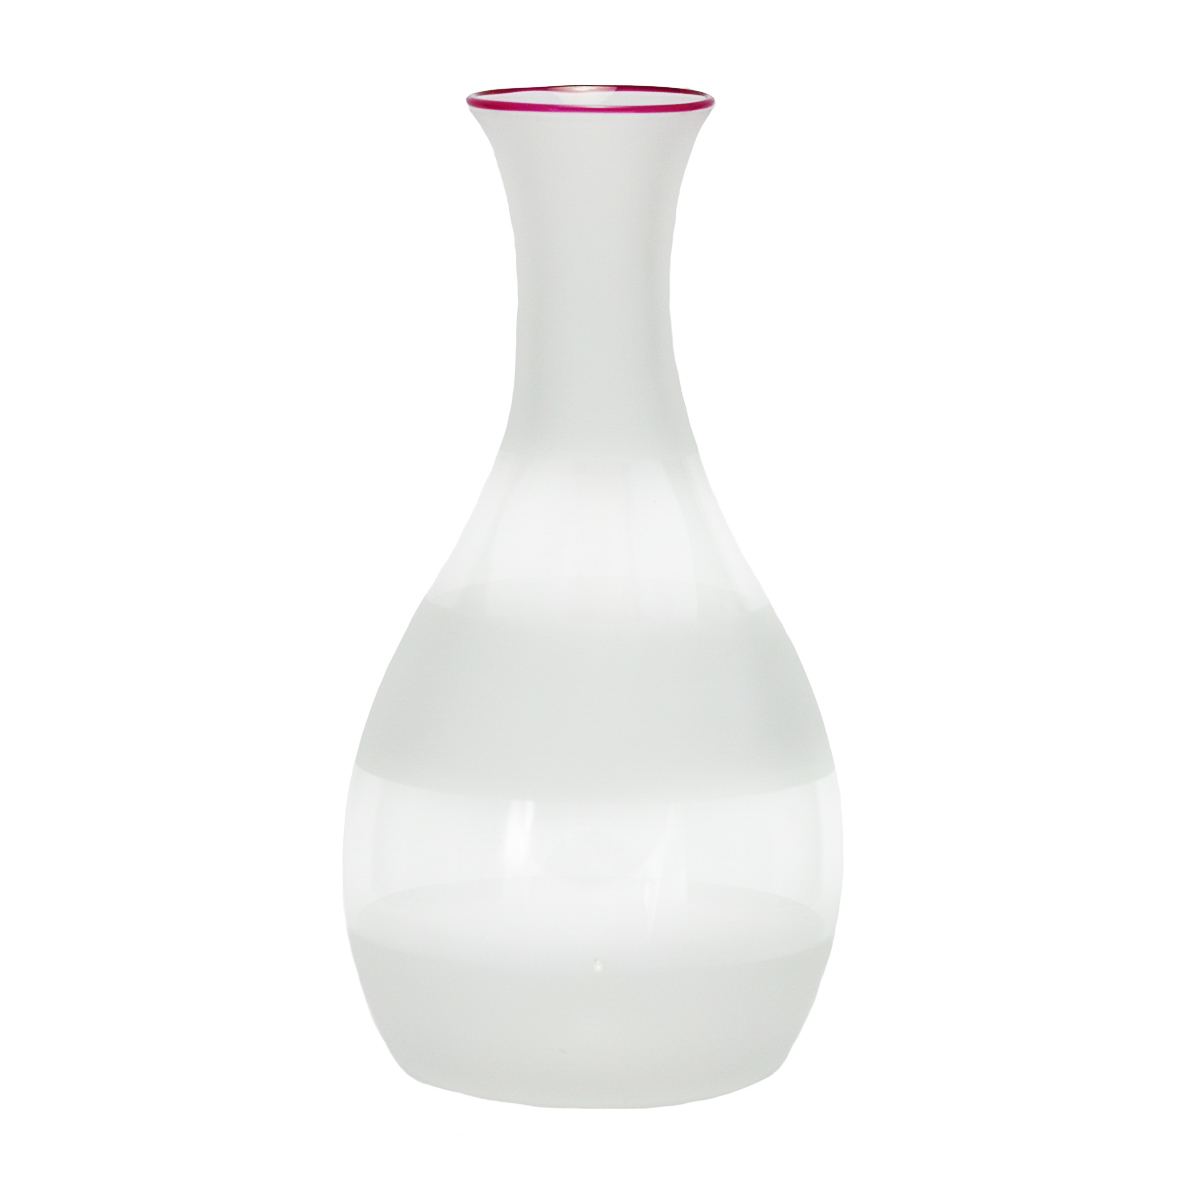 strica-jug-murano-glass-giberto-design-stripped-ruby-rim-water-drink-luxury